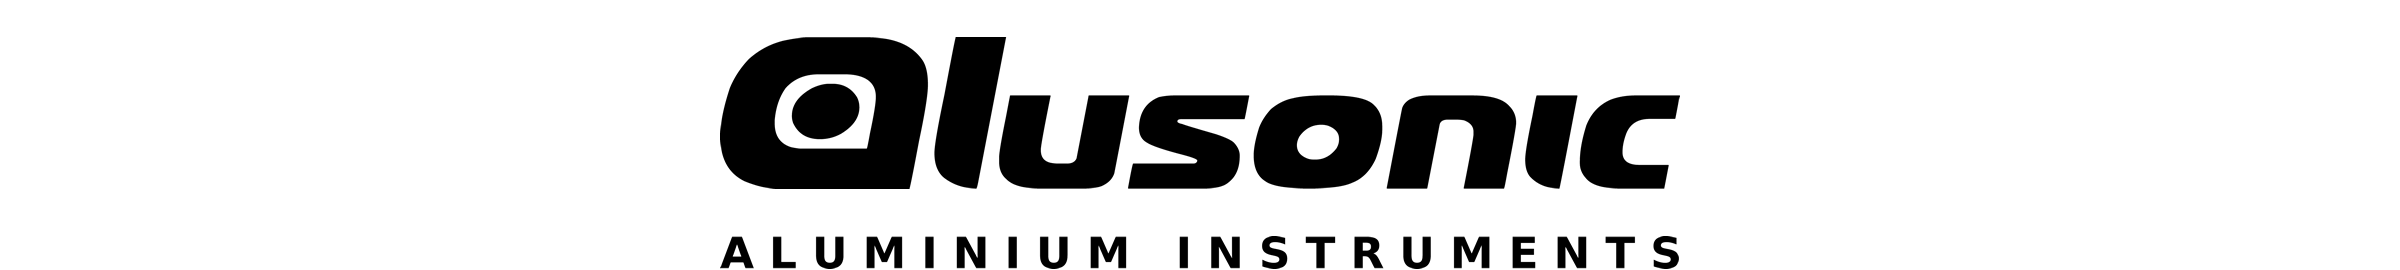 Logo_Alusonic_instruments